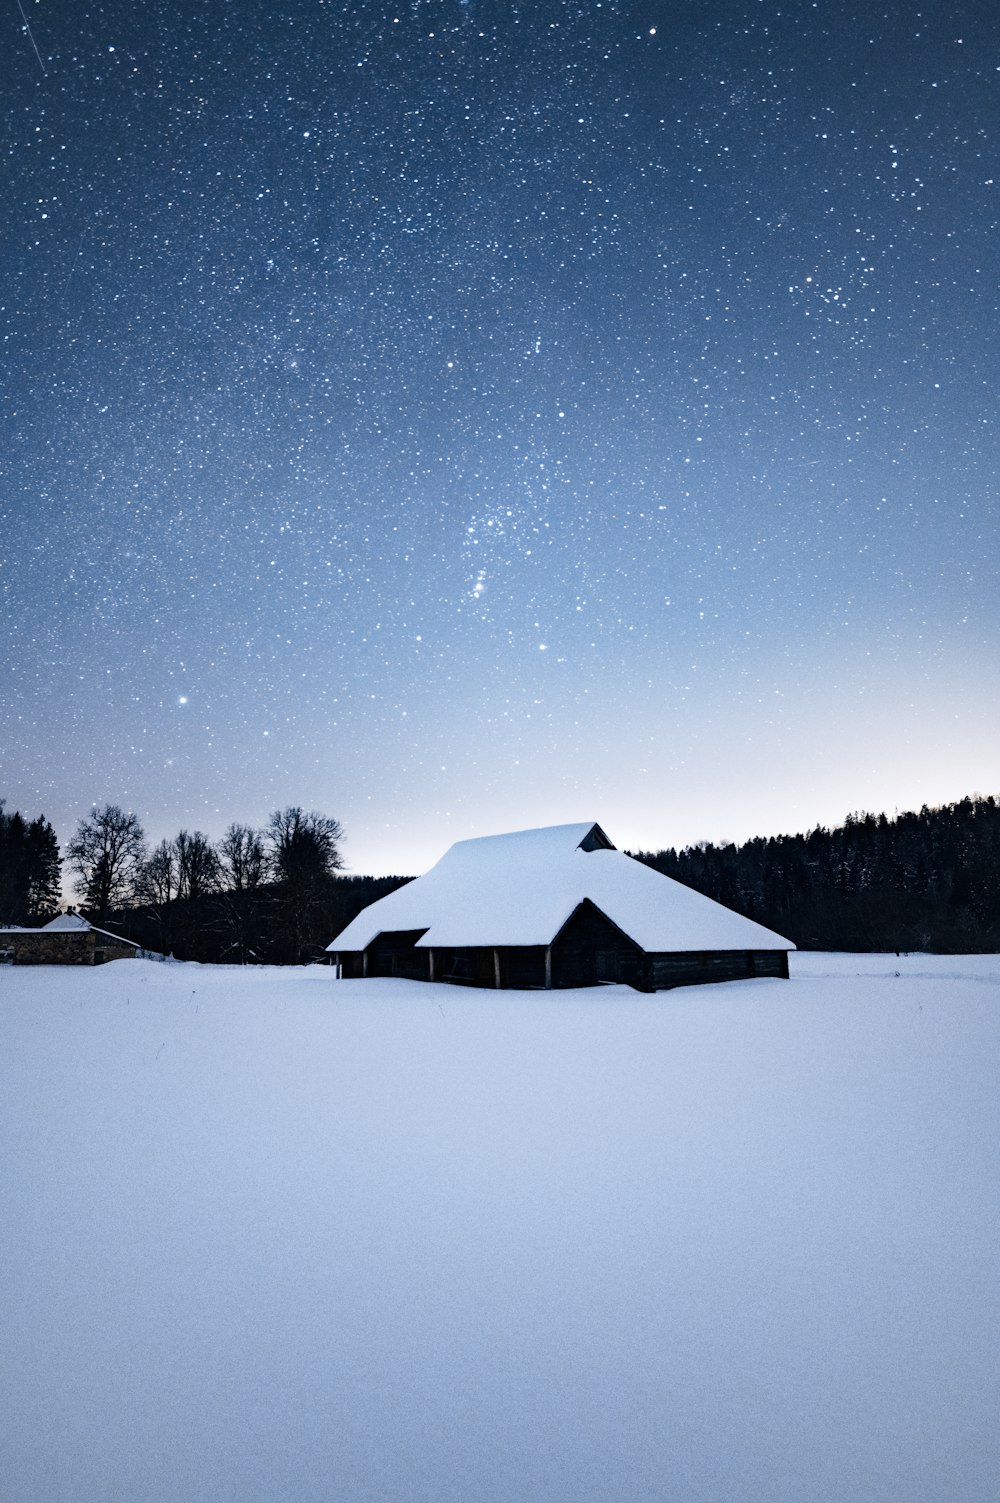 a barn in a snowy field under a night sky